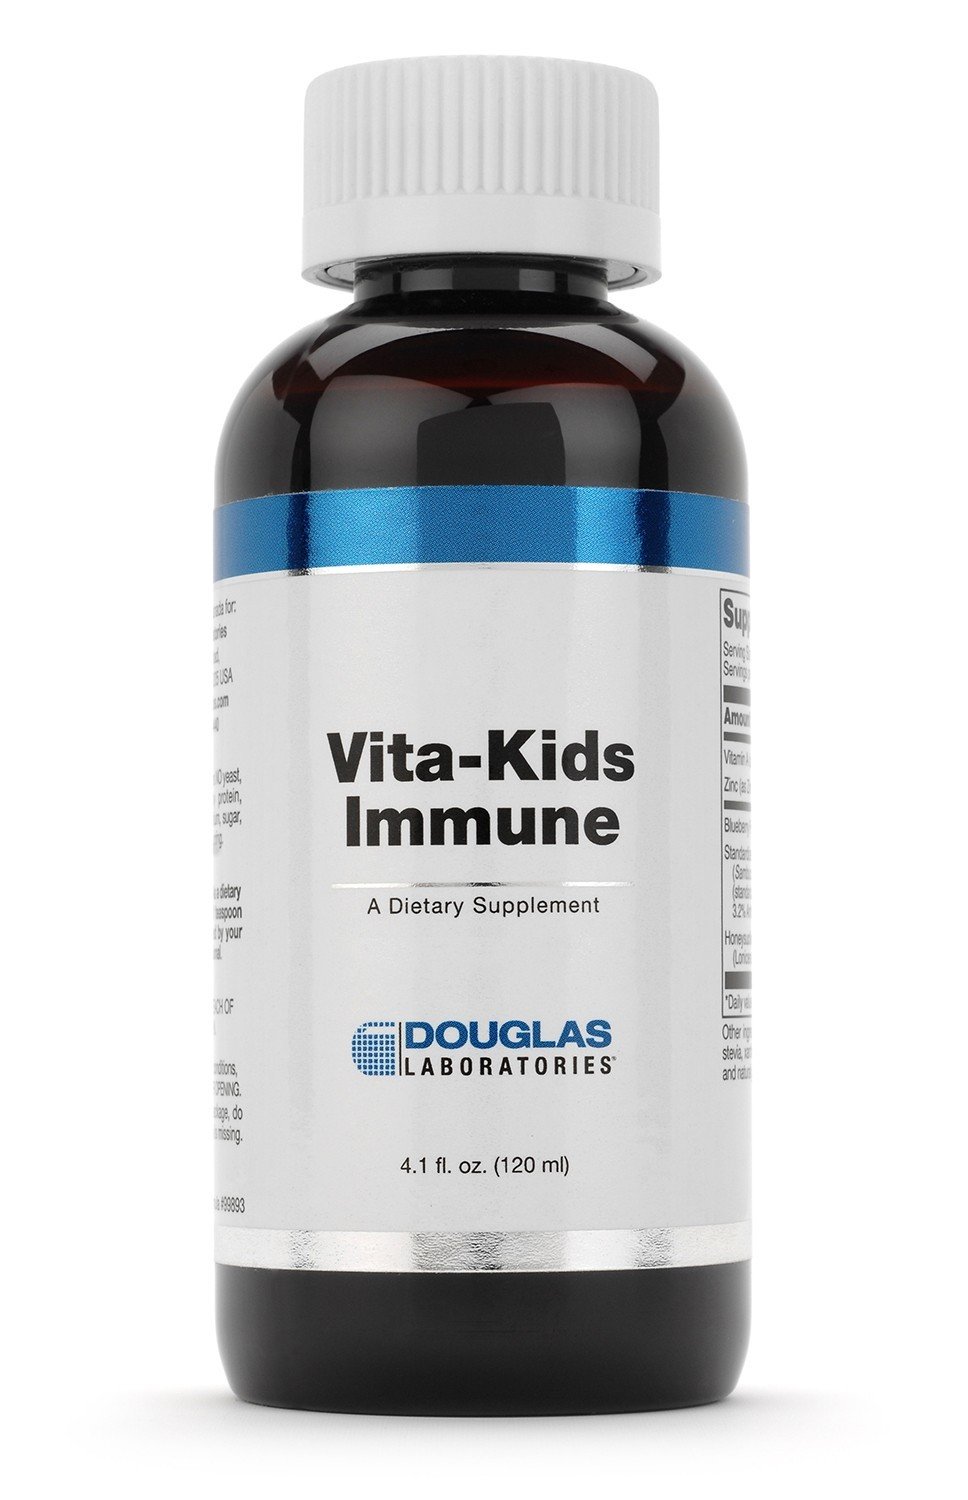 Vita-Kids Immune by Douglas Laboratories